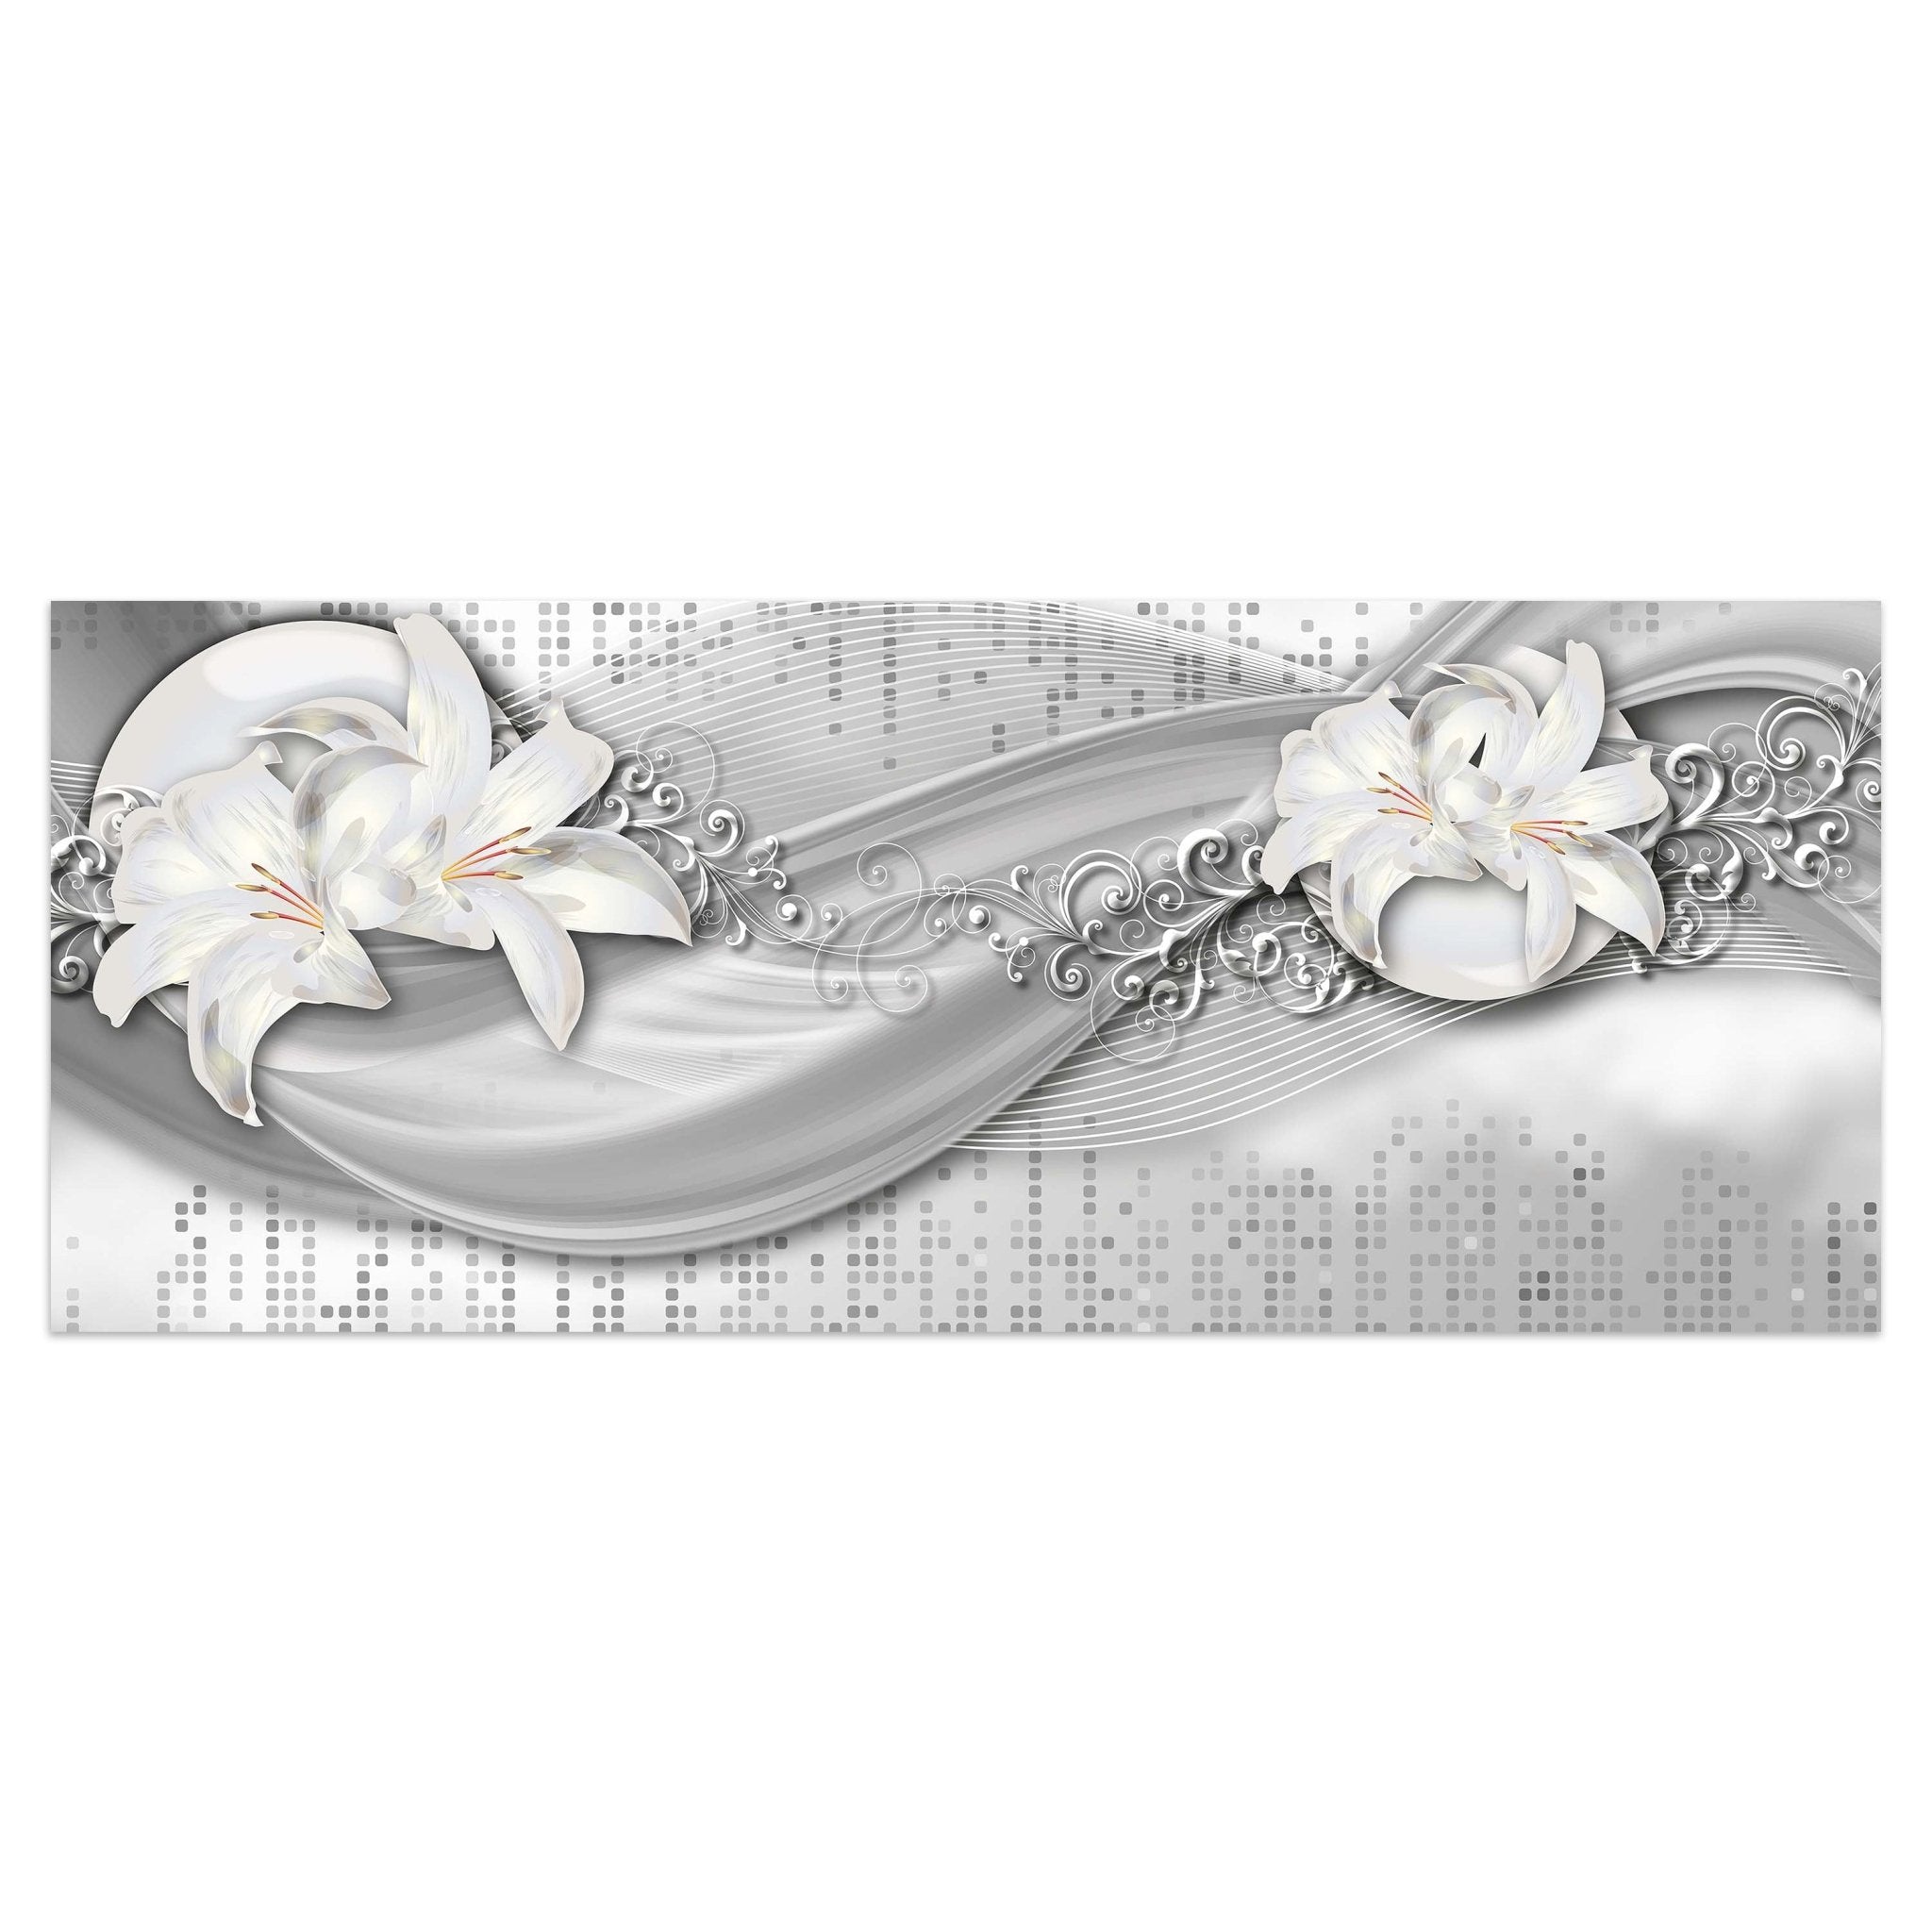 Leinwandbild abstrakte Lilien grau silber M0524 kaufen - Bild 1